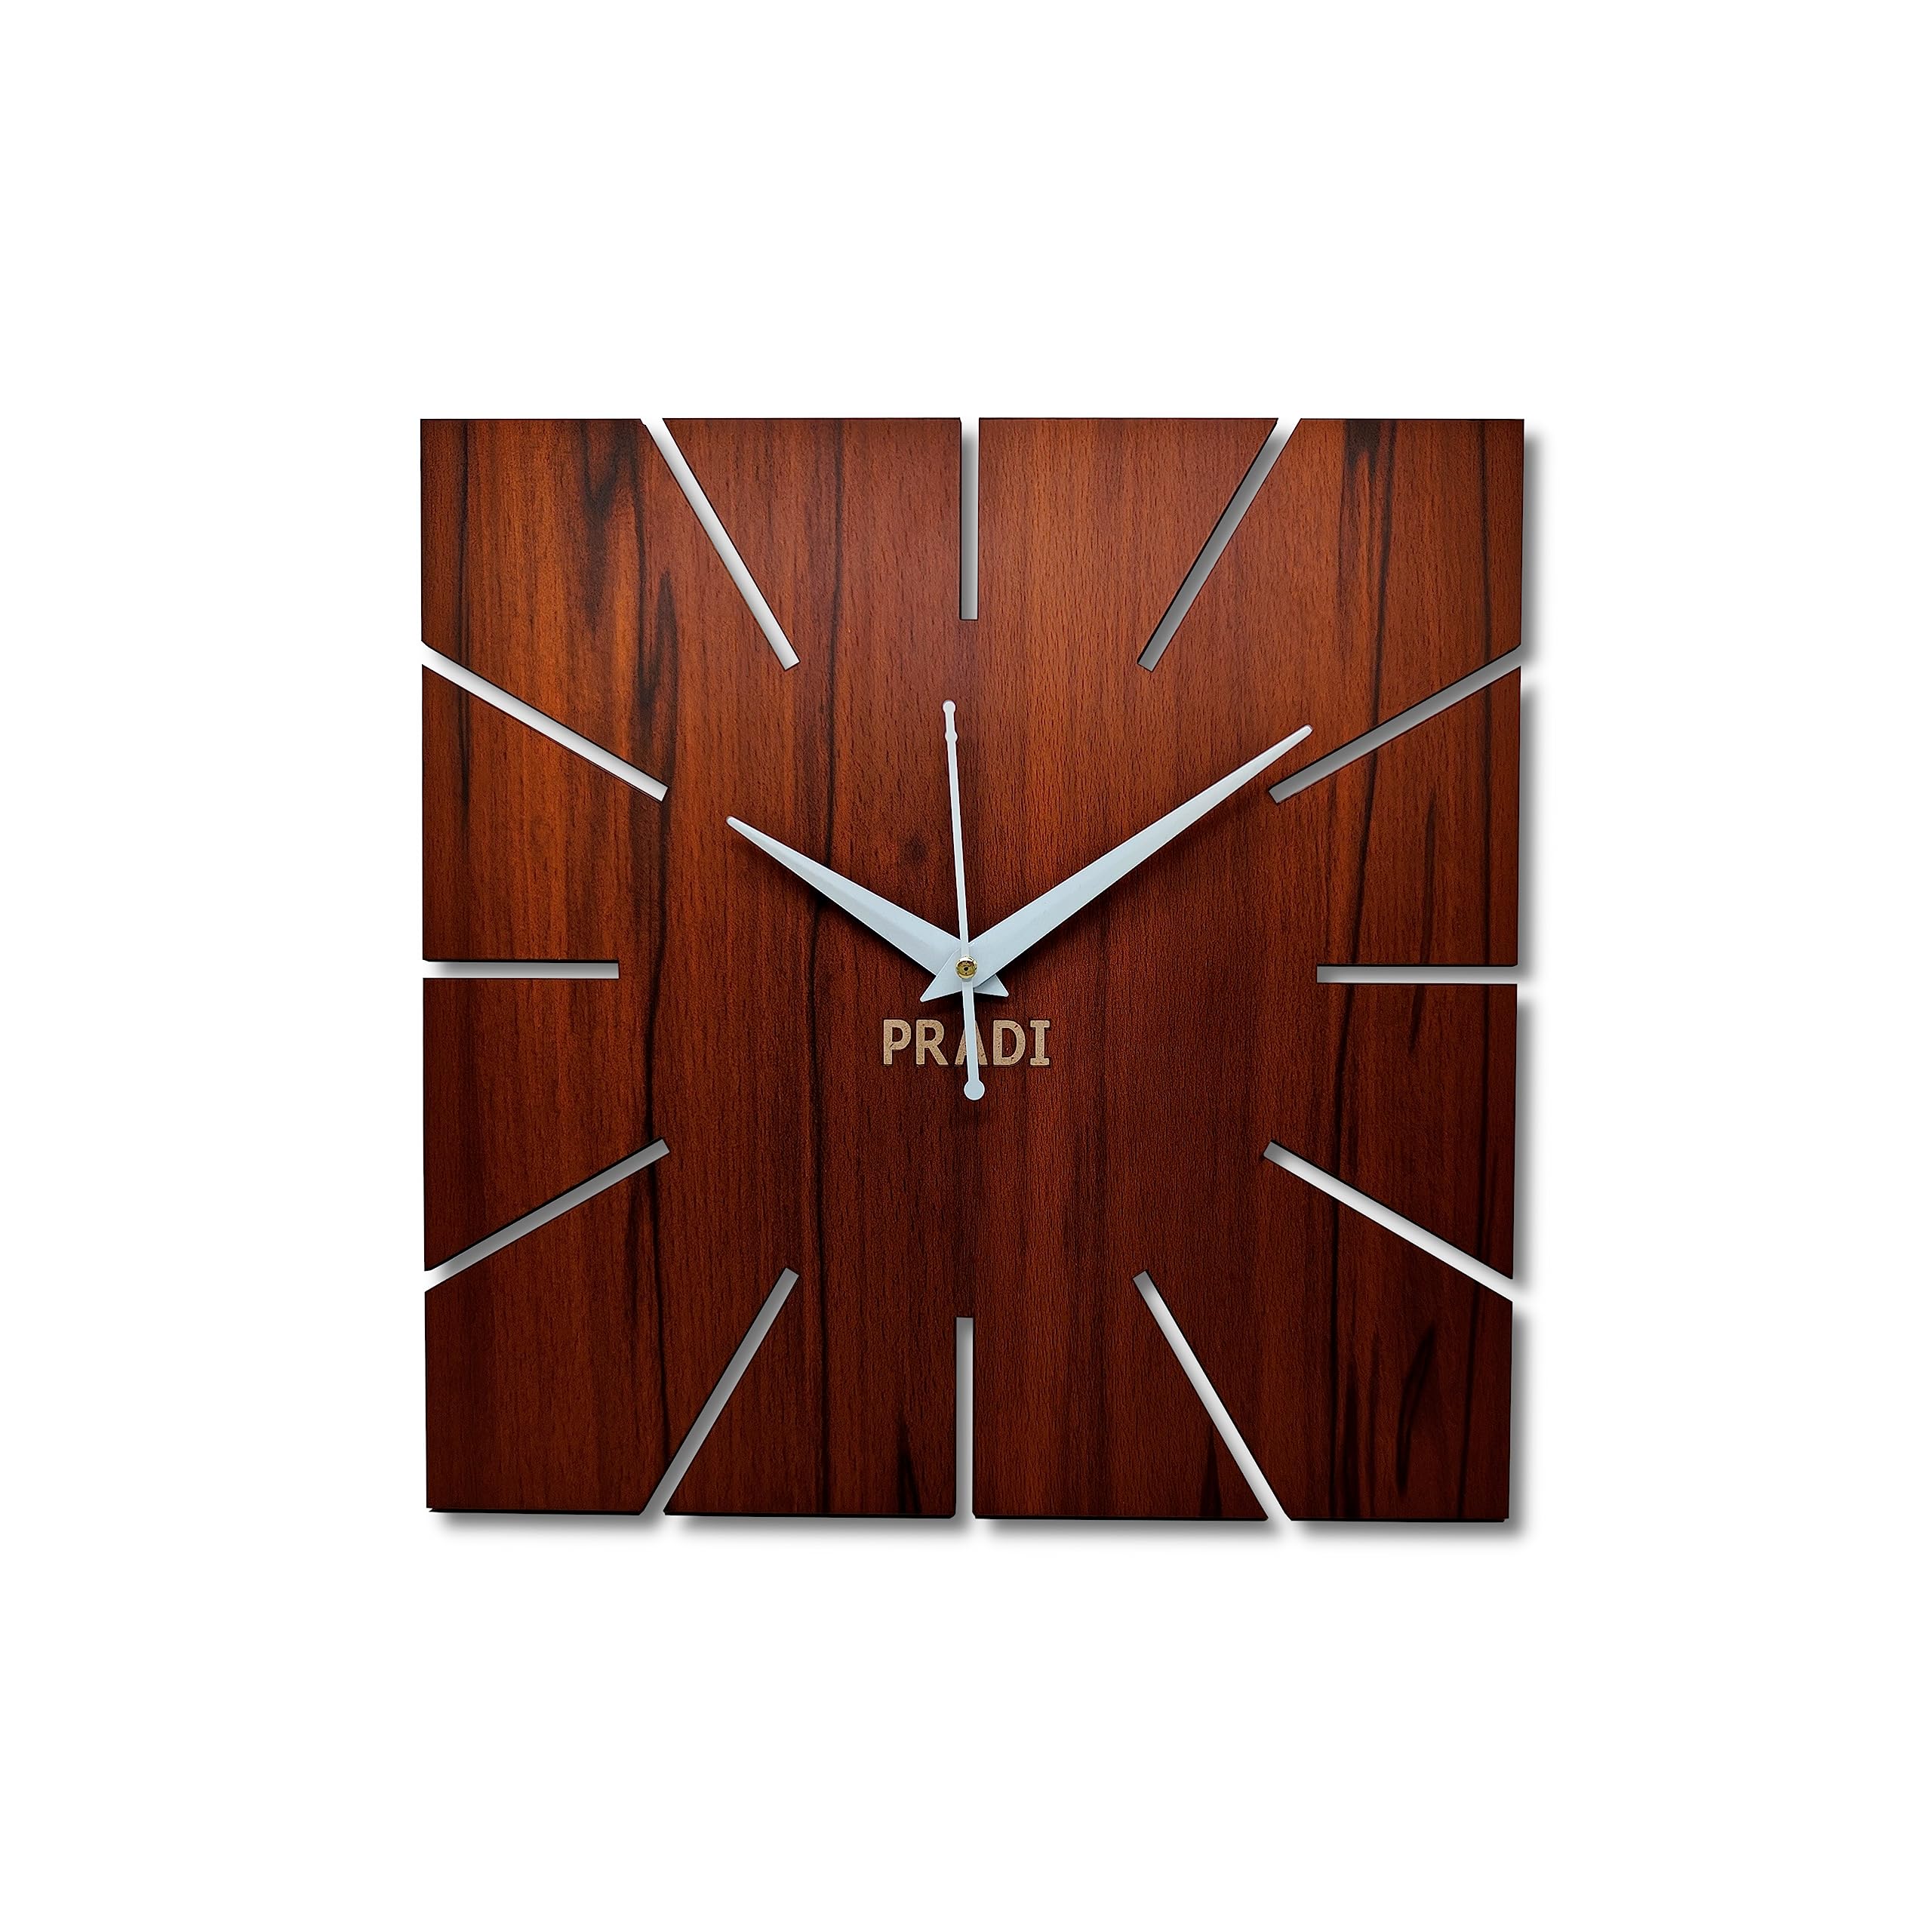 PRADI Handcrafted Wooden Wall Clock